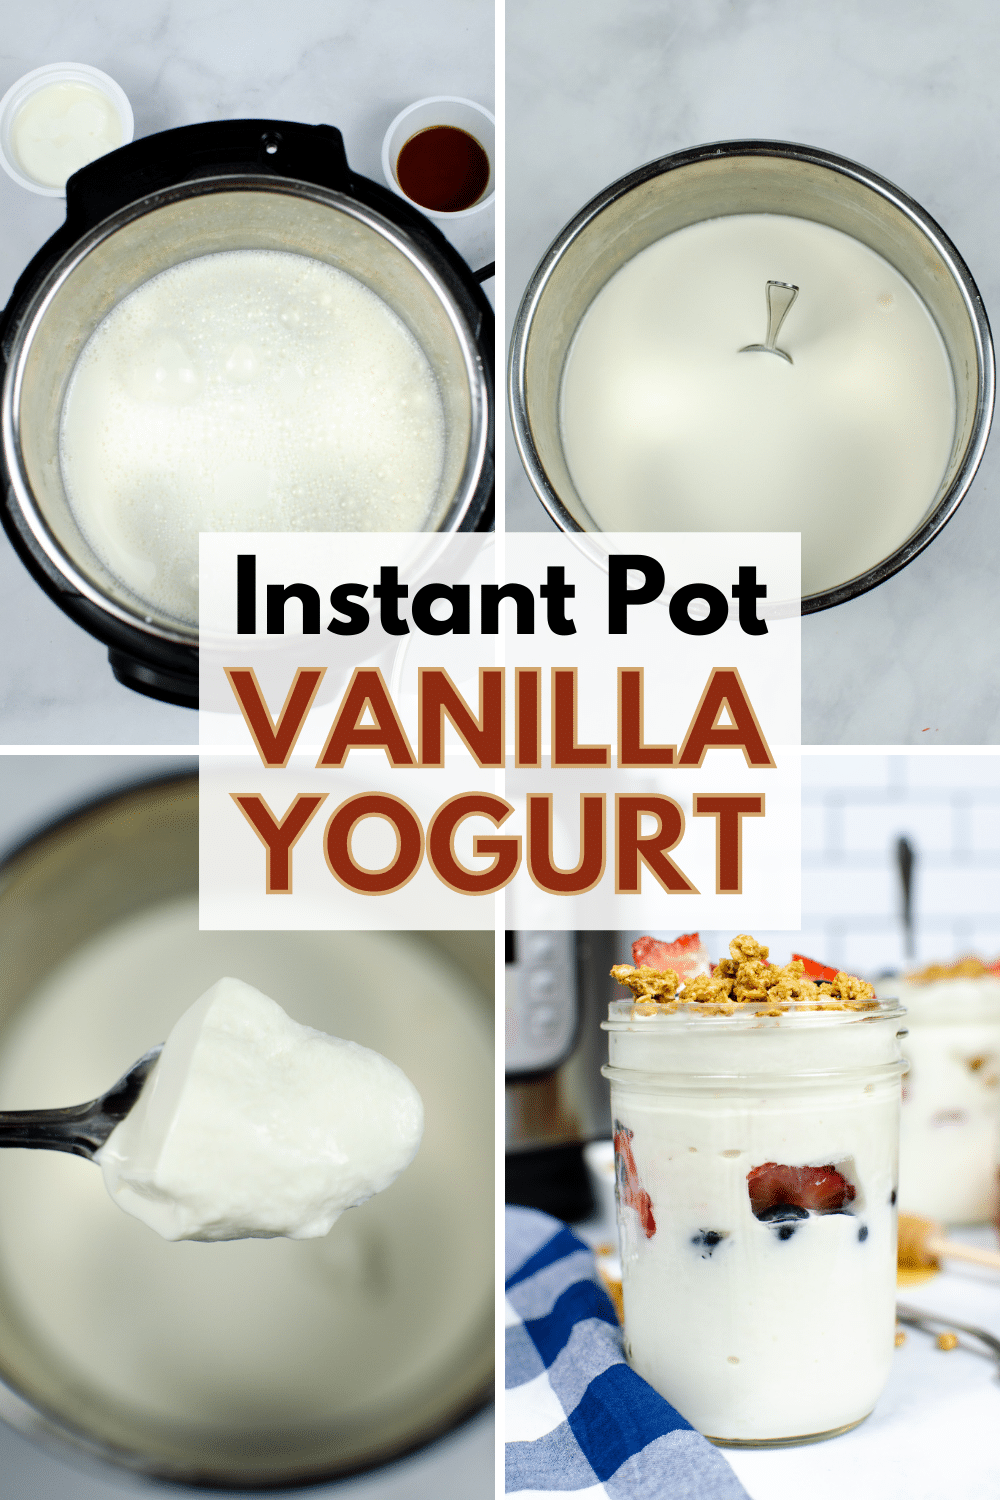 This Instant Pot Vanilla Yogurt is creamy, rich, and easy to make! It’s the perfect breakfast or snack and made with just a few ingredients. #instantpot #pressurecooker #vanillayogurt #yogurt #homemadeyogurt via @wondermomwannab